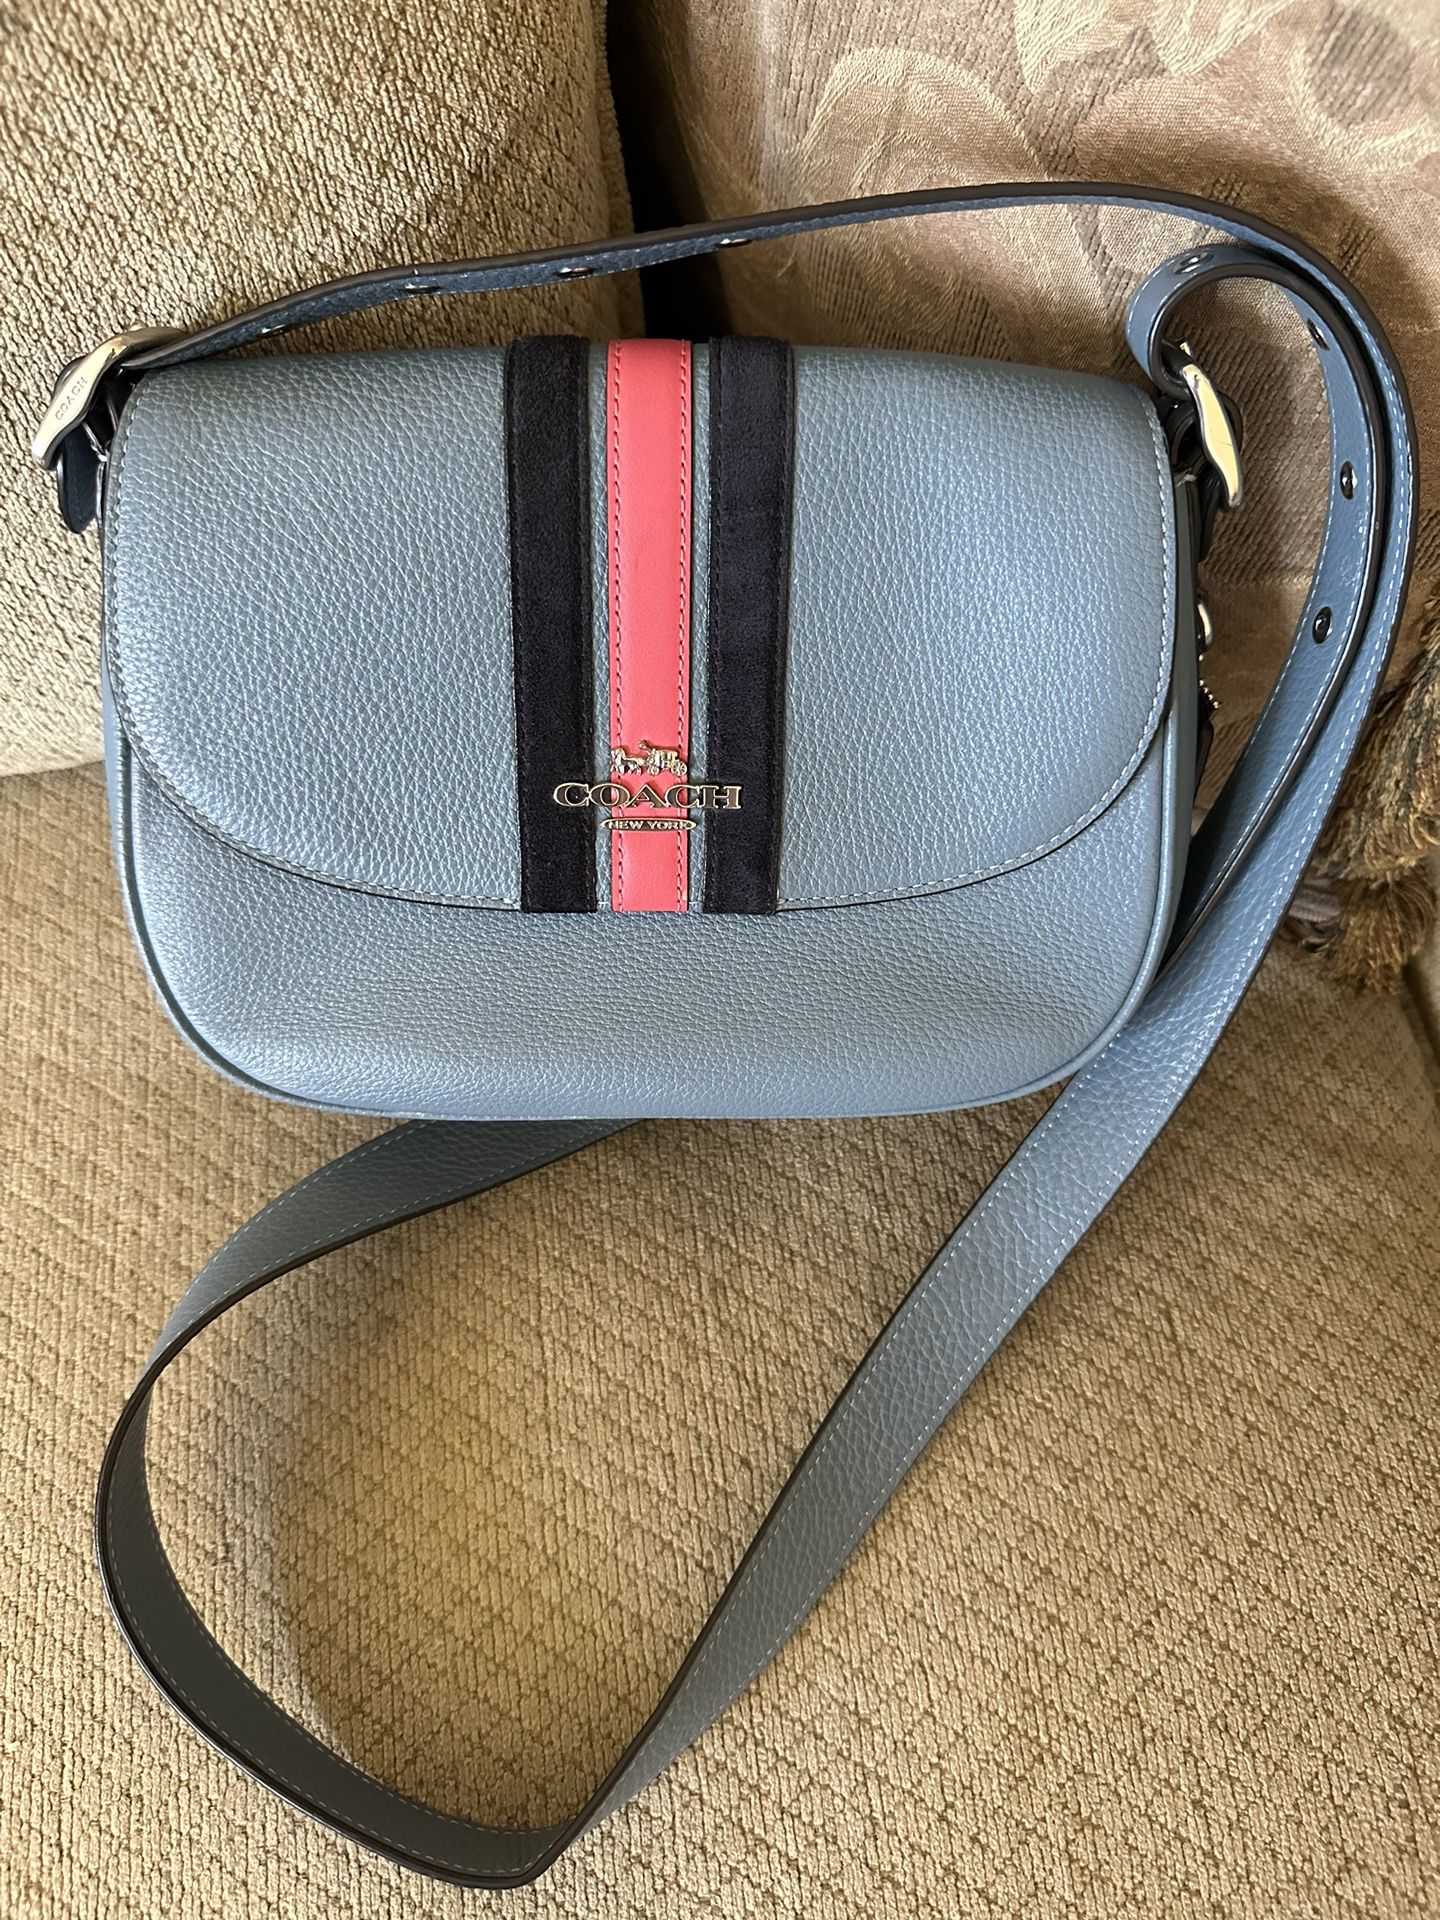 Louis Vuitton CrossBody Bag for Sale in Phoenix, AZ - OfferUp